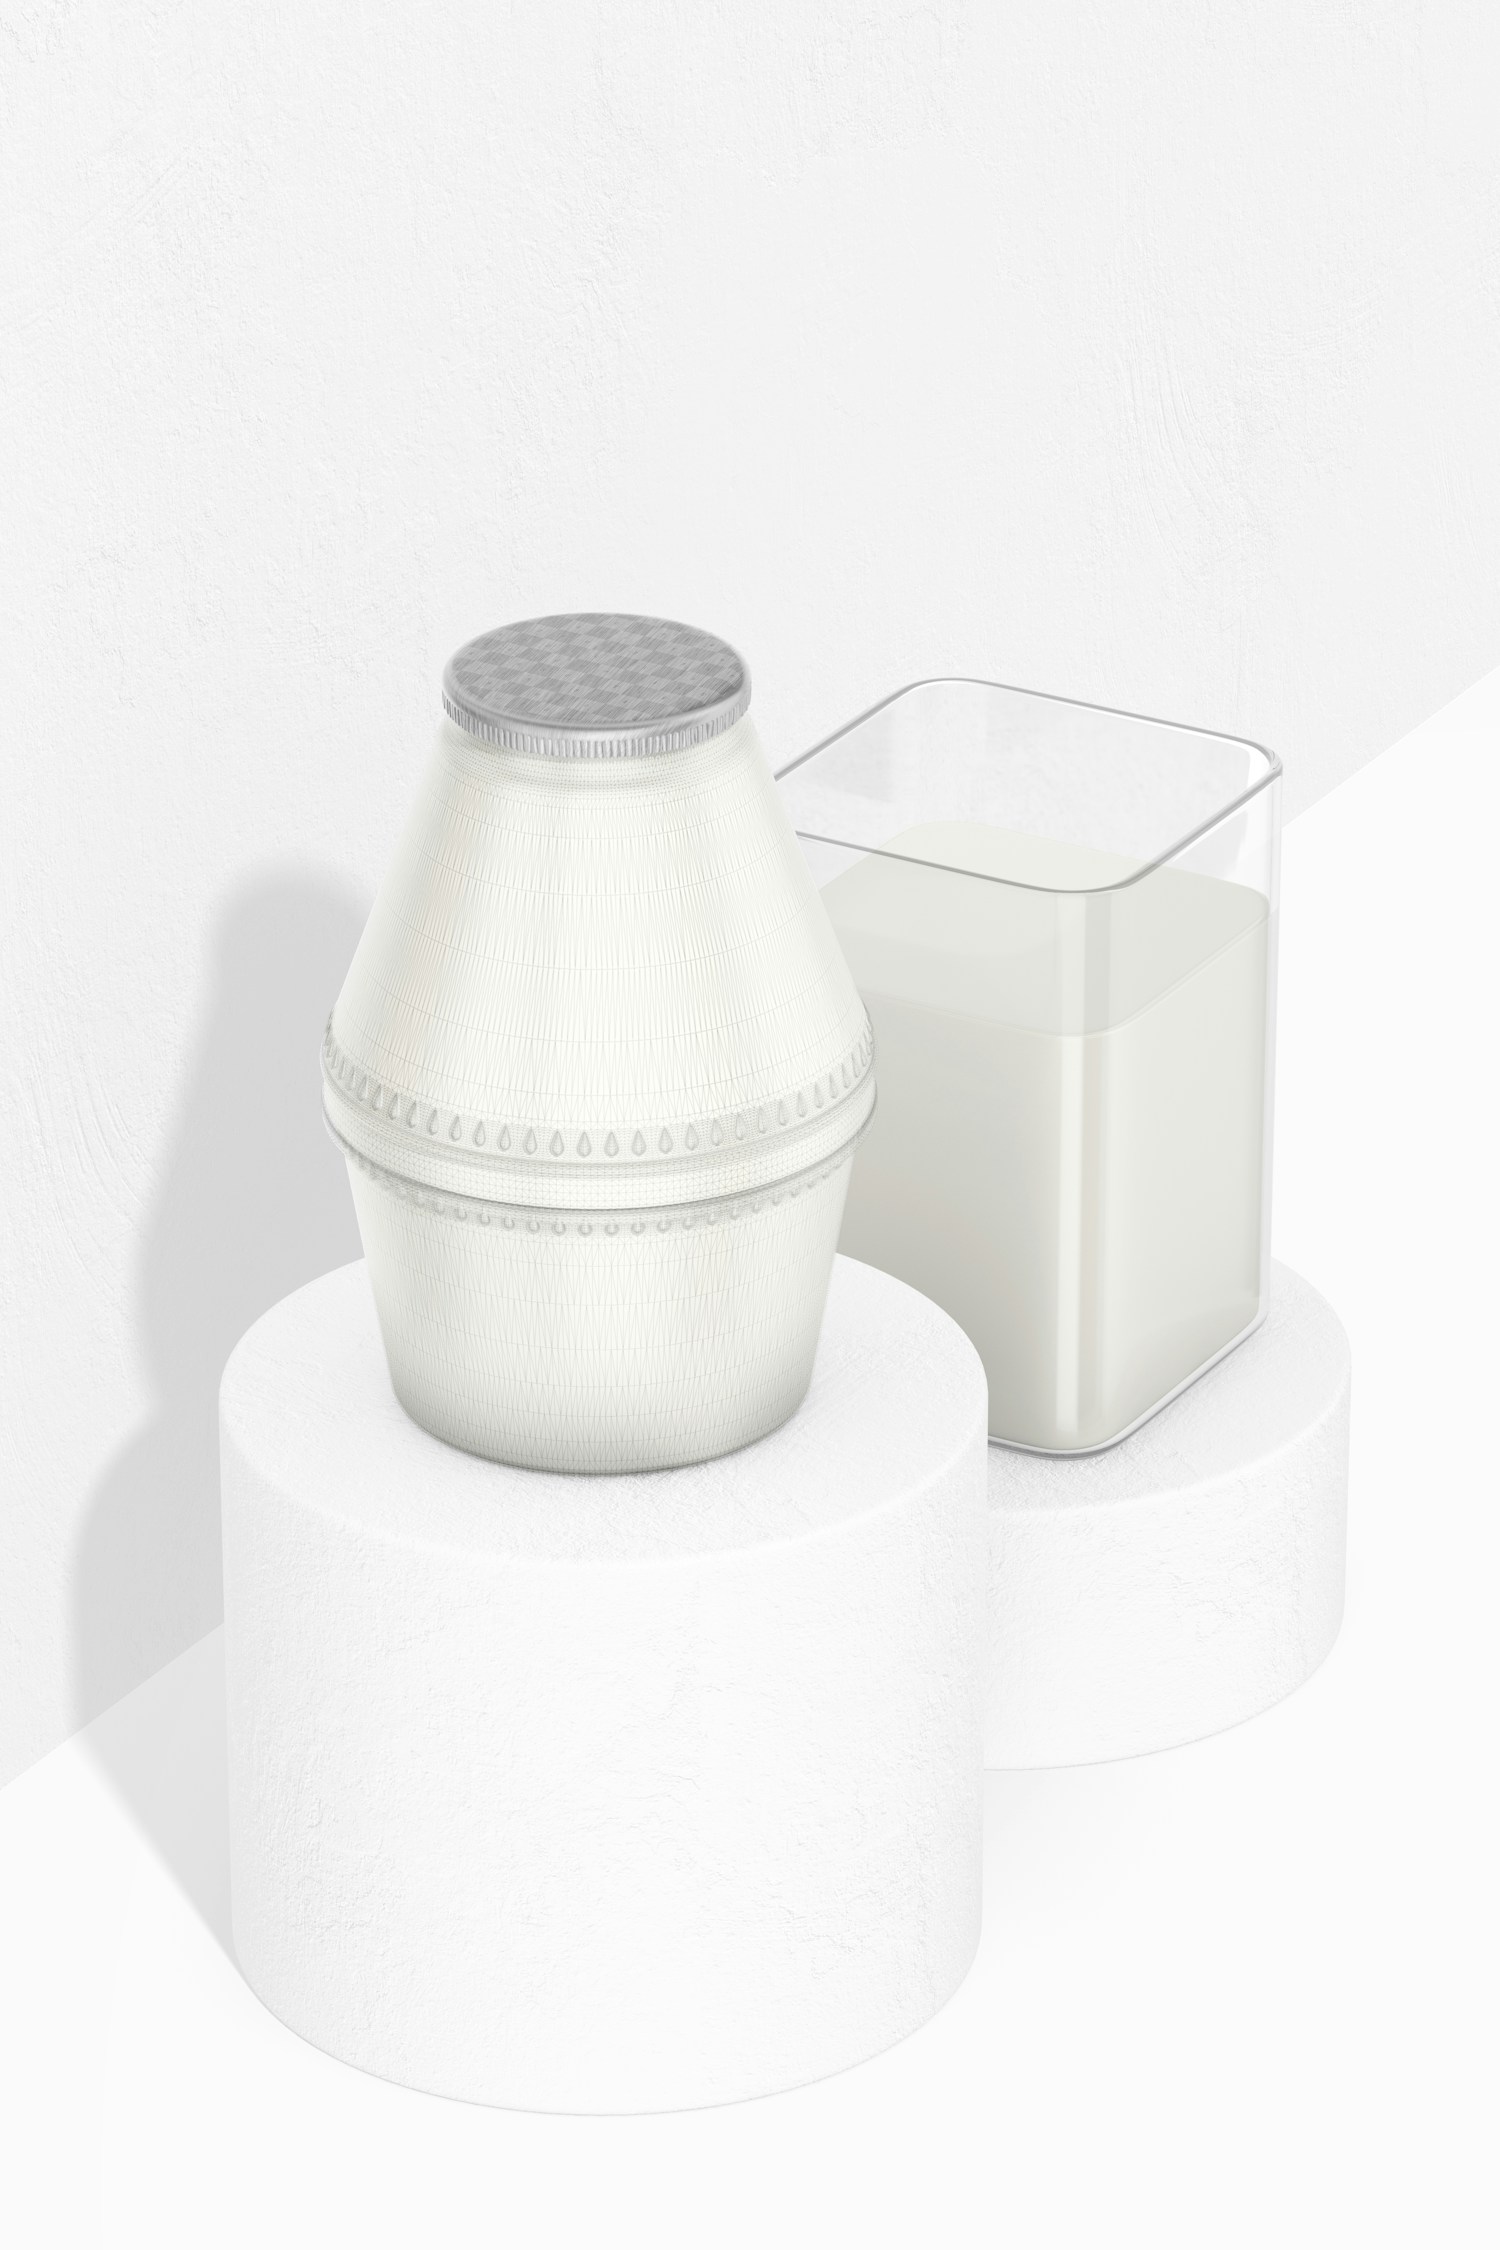 Stubby Milk Bottle Mockup, High Angle View